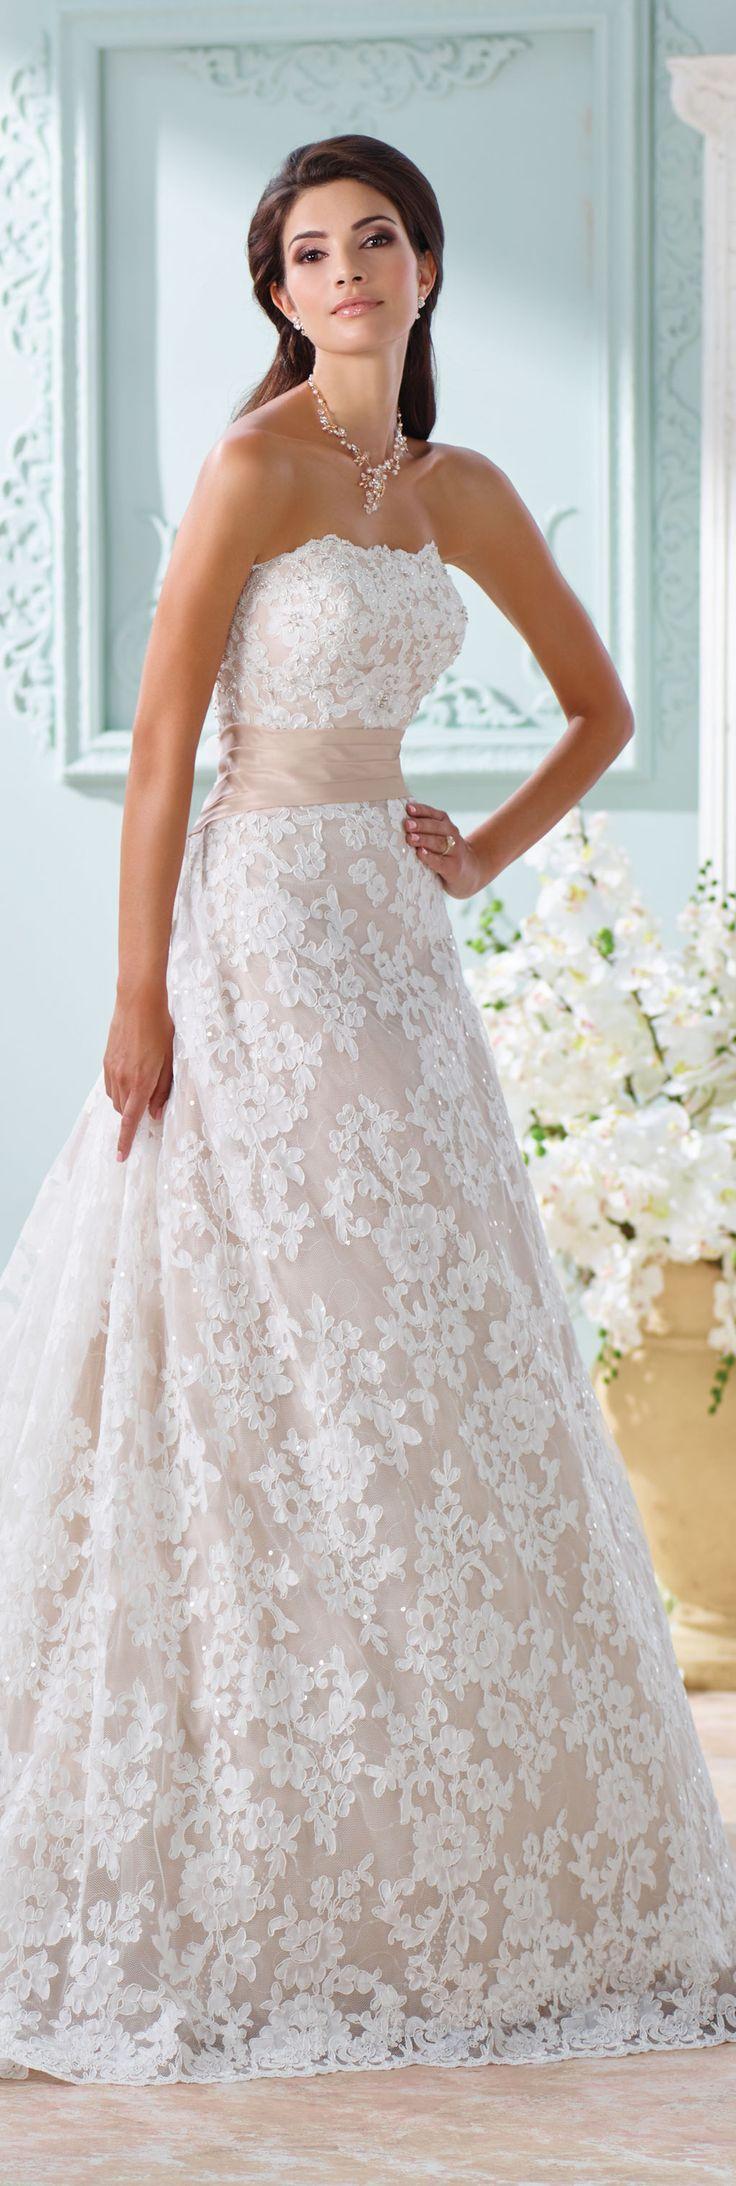 زفاف - Lace Aline Wedding Gown